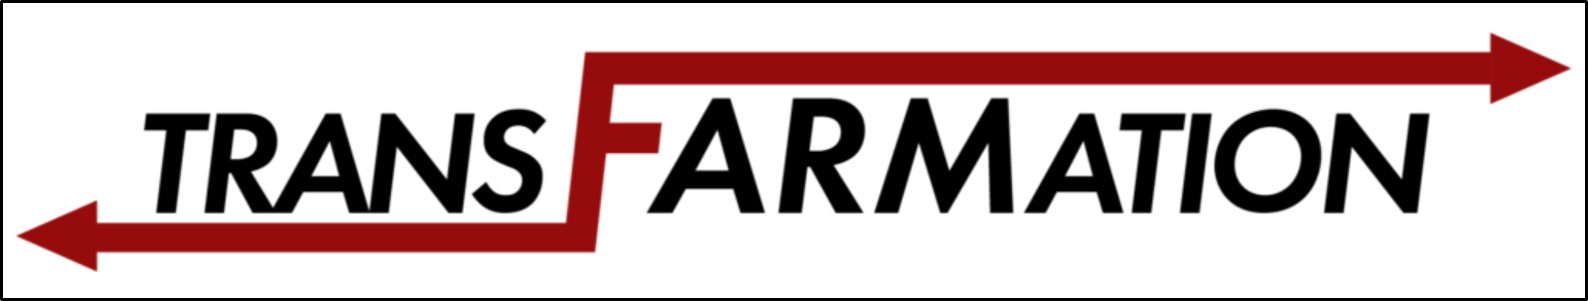 TransFArmation podcast logo